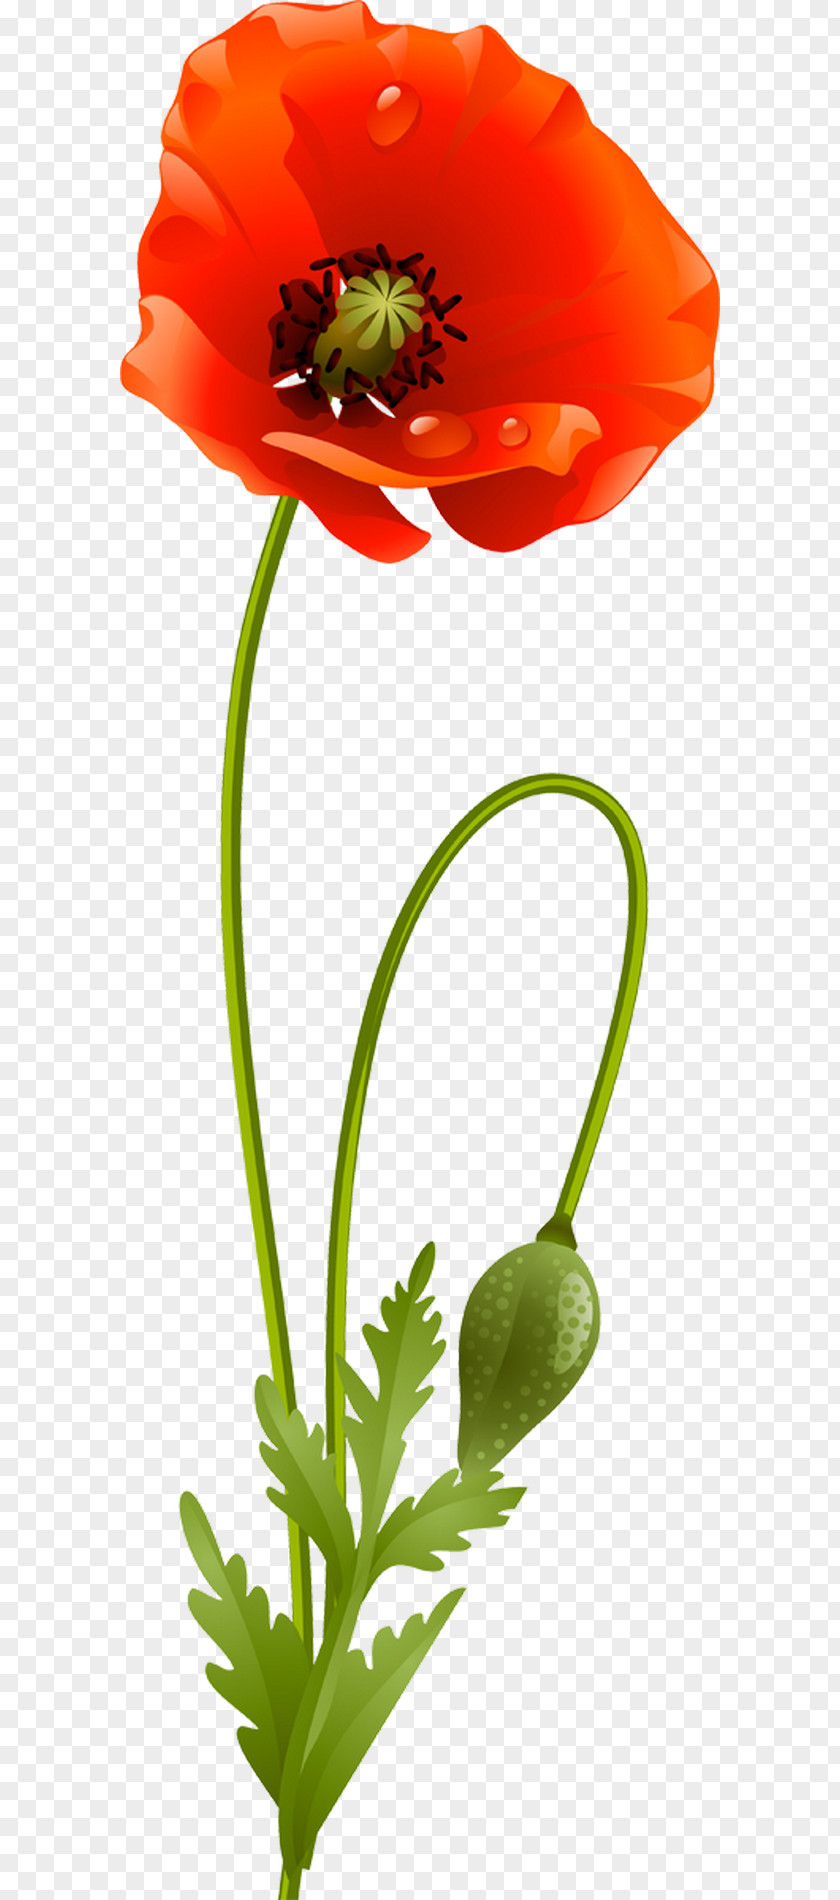 Poppies Flower Poppy Clip Art PNG